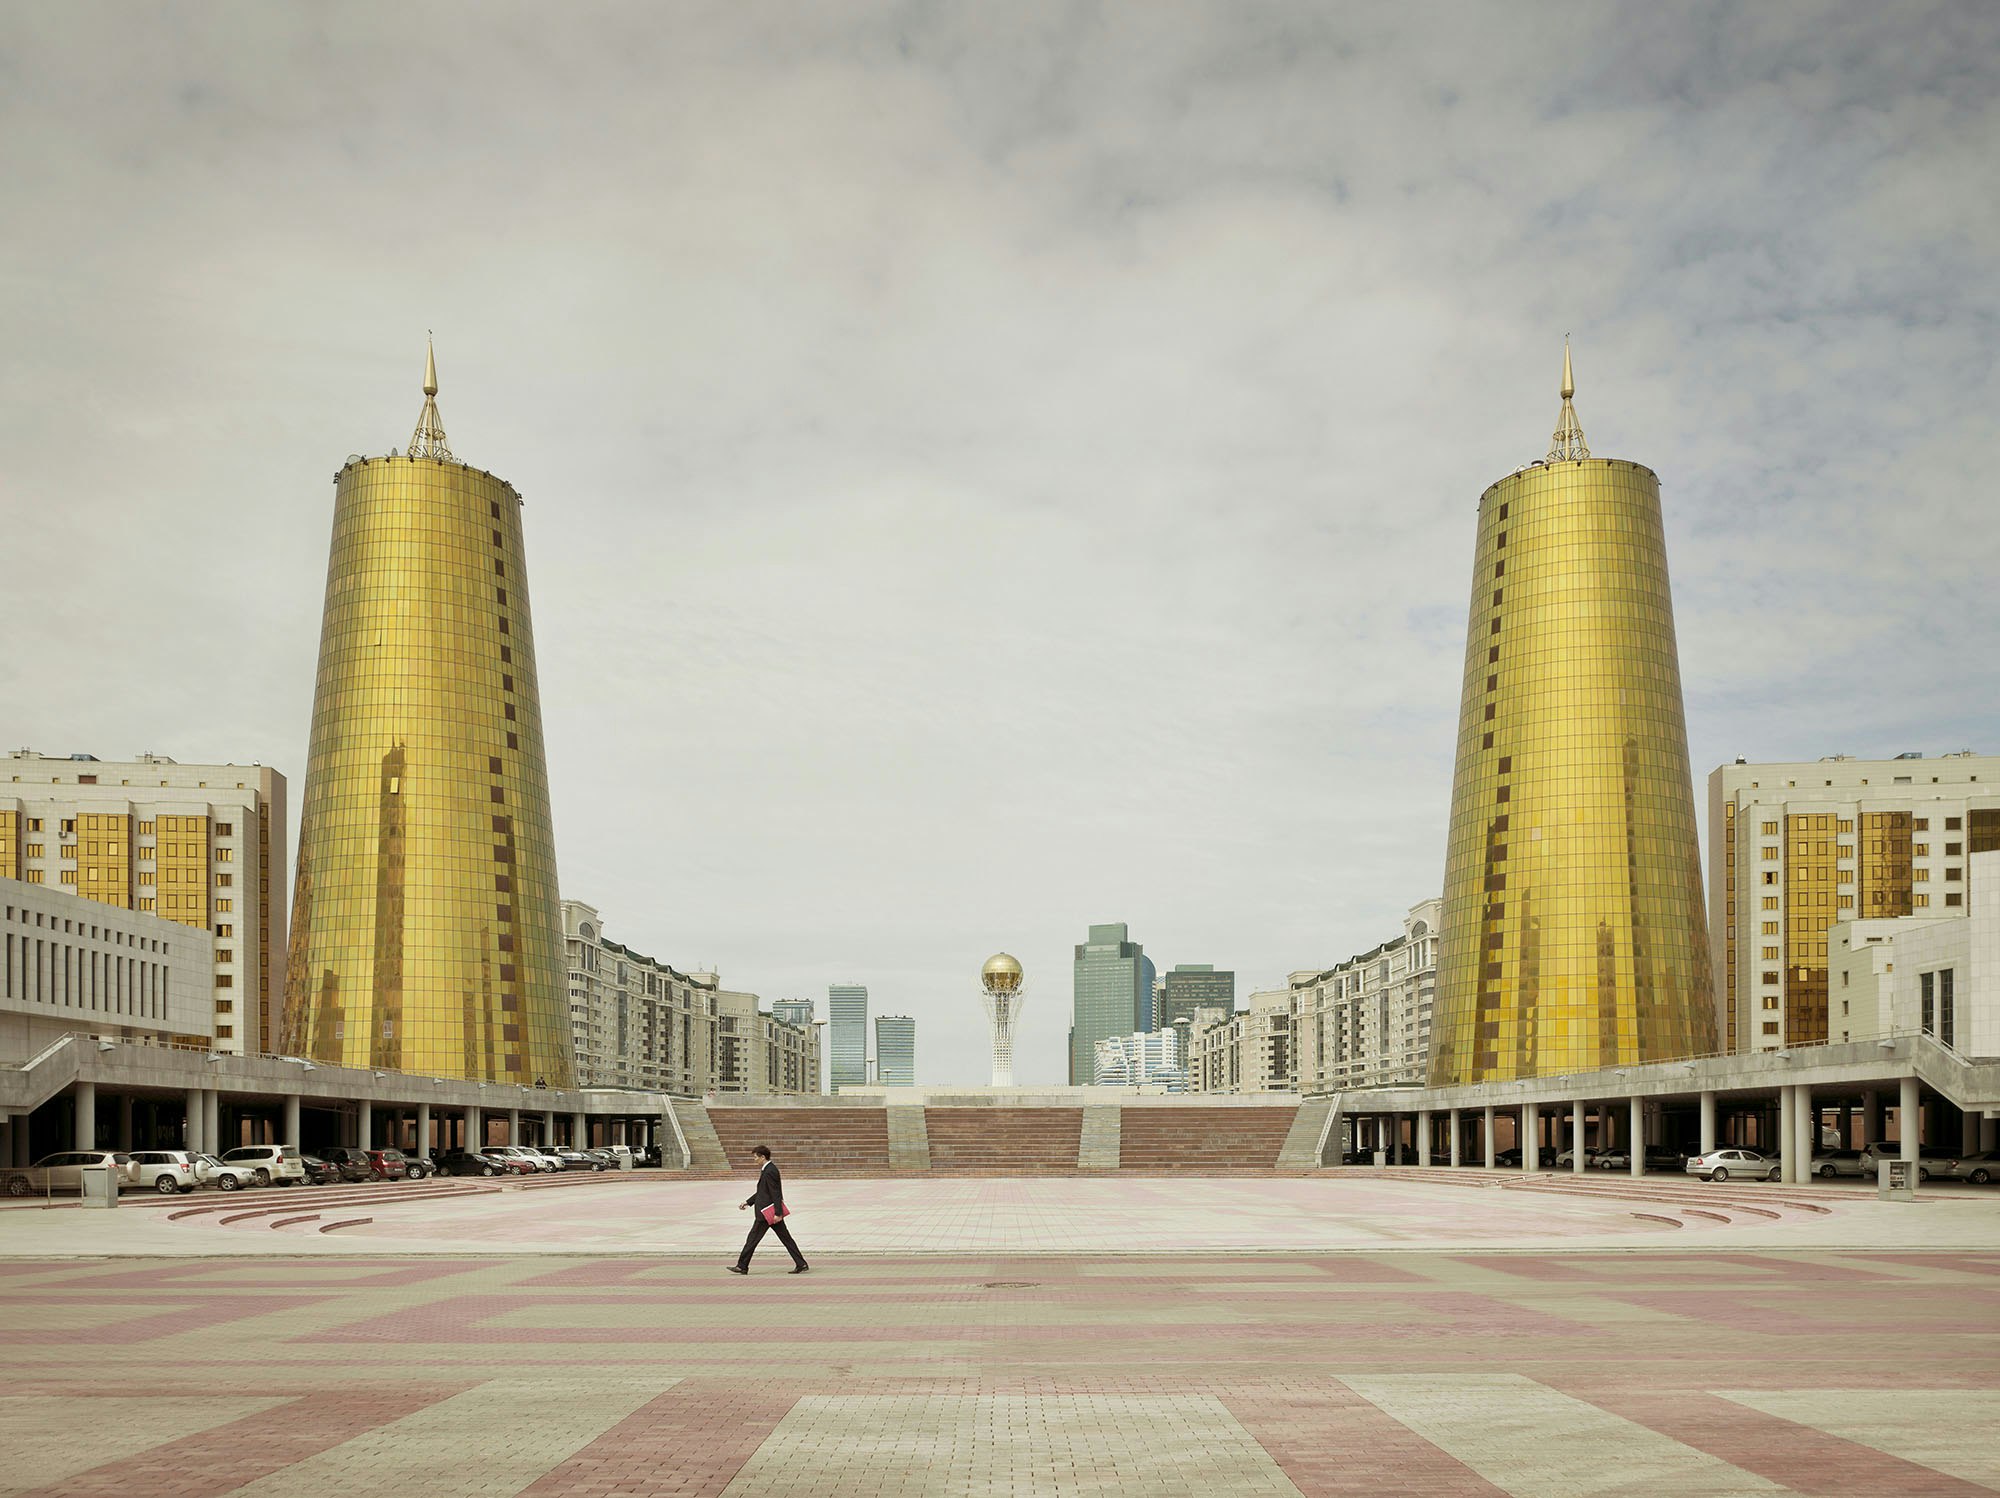 Ministry Buildings in Astana, Kazakhstan. 